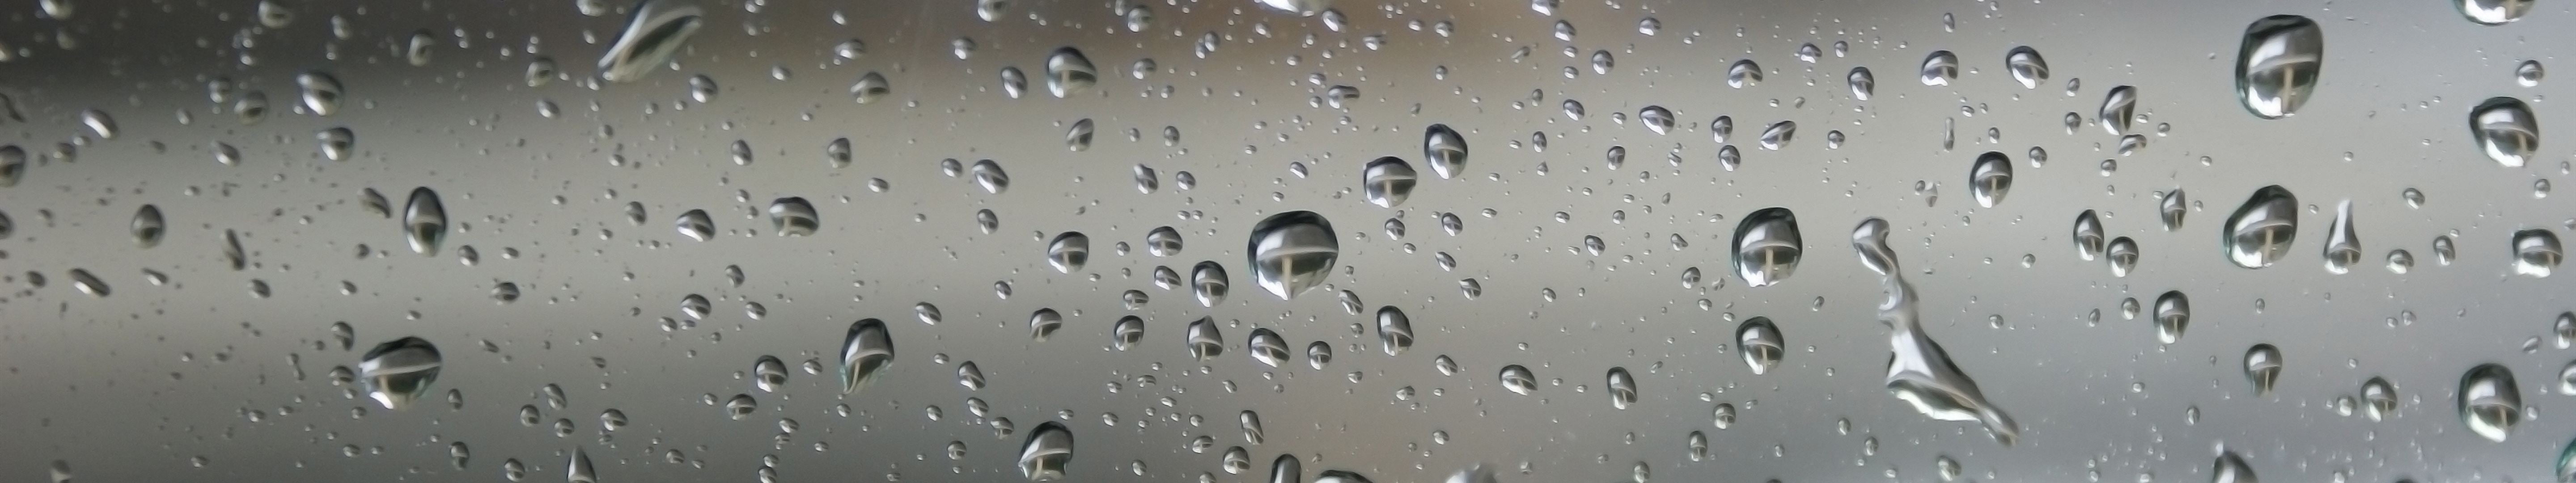 water dew wallpaper, triple screen, drop, wet, glass - material